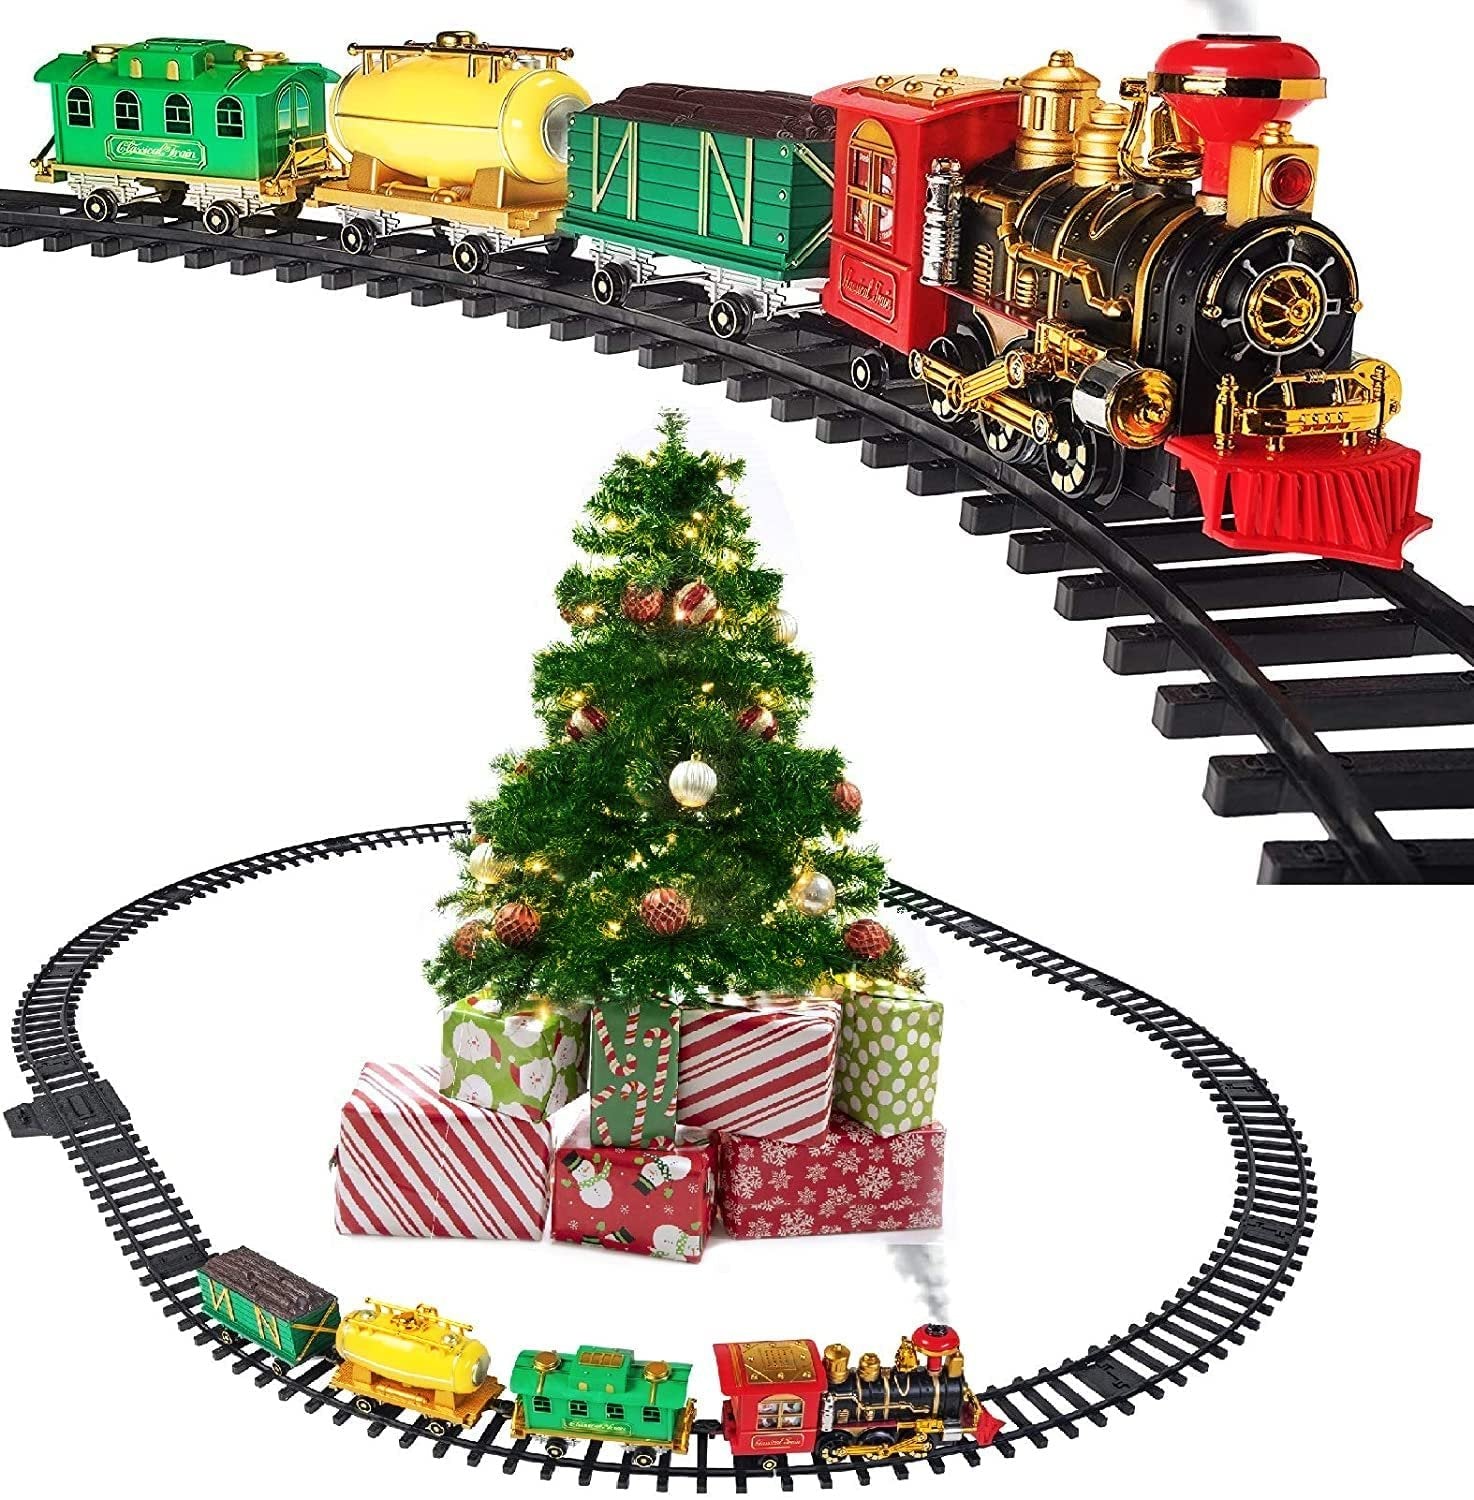 Prextex Christmas Train Set - Christmas Tree Train Set Around The Tree with Real Smoke, Music & Lights - Christmas Train Sets for Under The Tree - Train Set for Christmas Tree